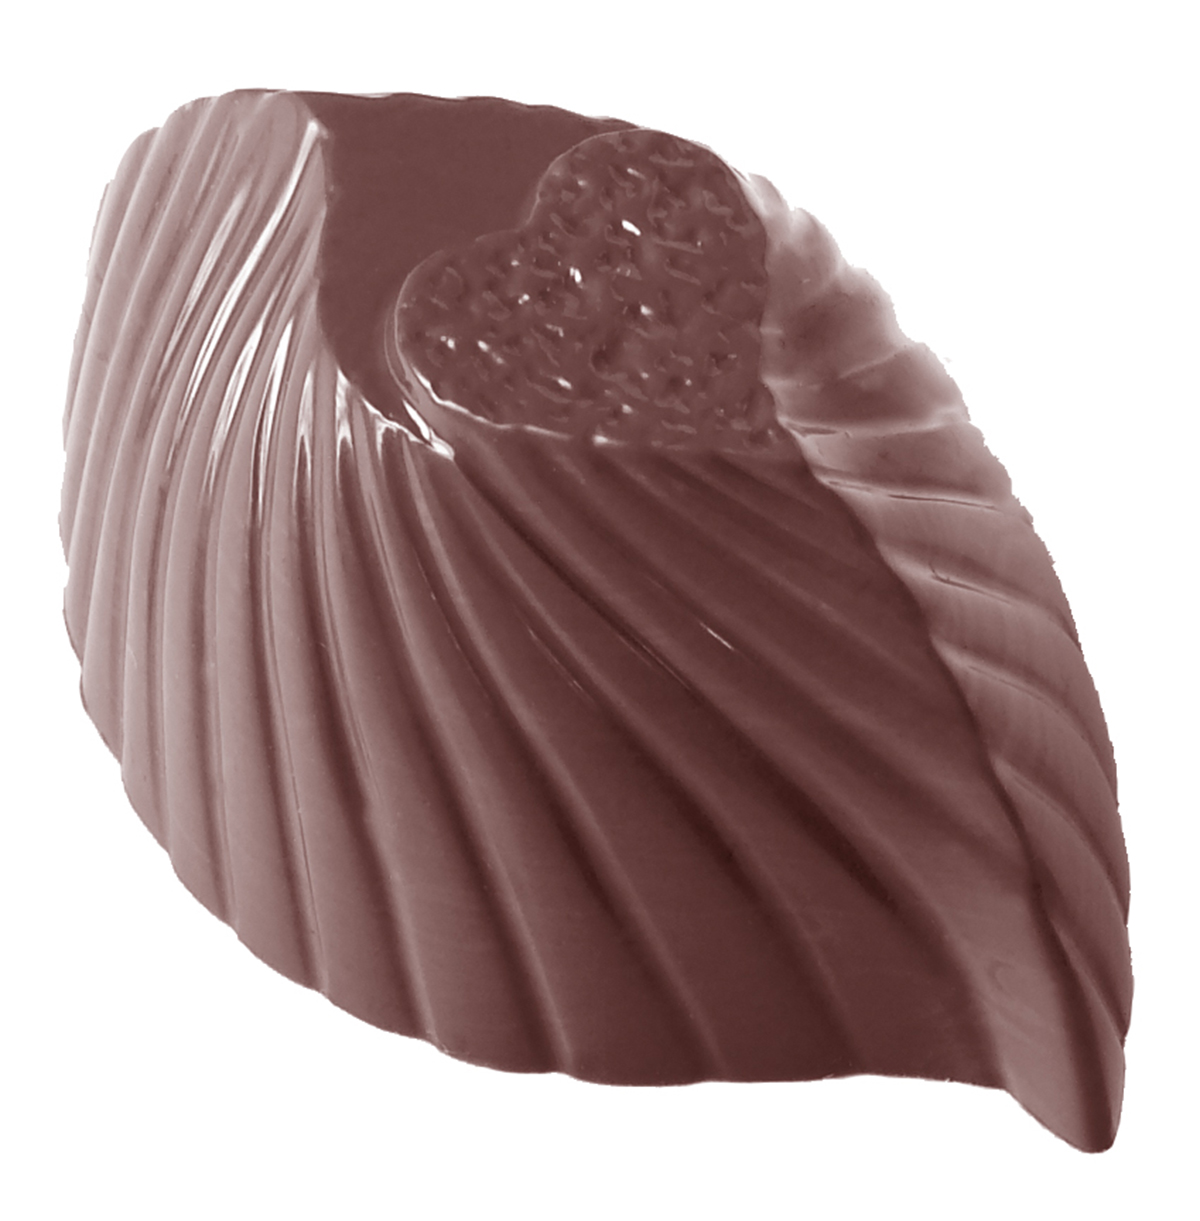 Se Professionel chokoladeform i polycarbonat - Classy heart CW1517 hos BageTid.dk